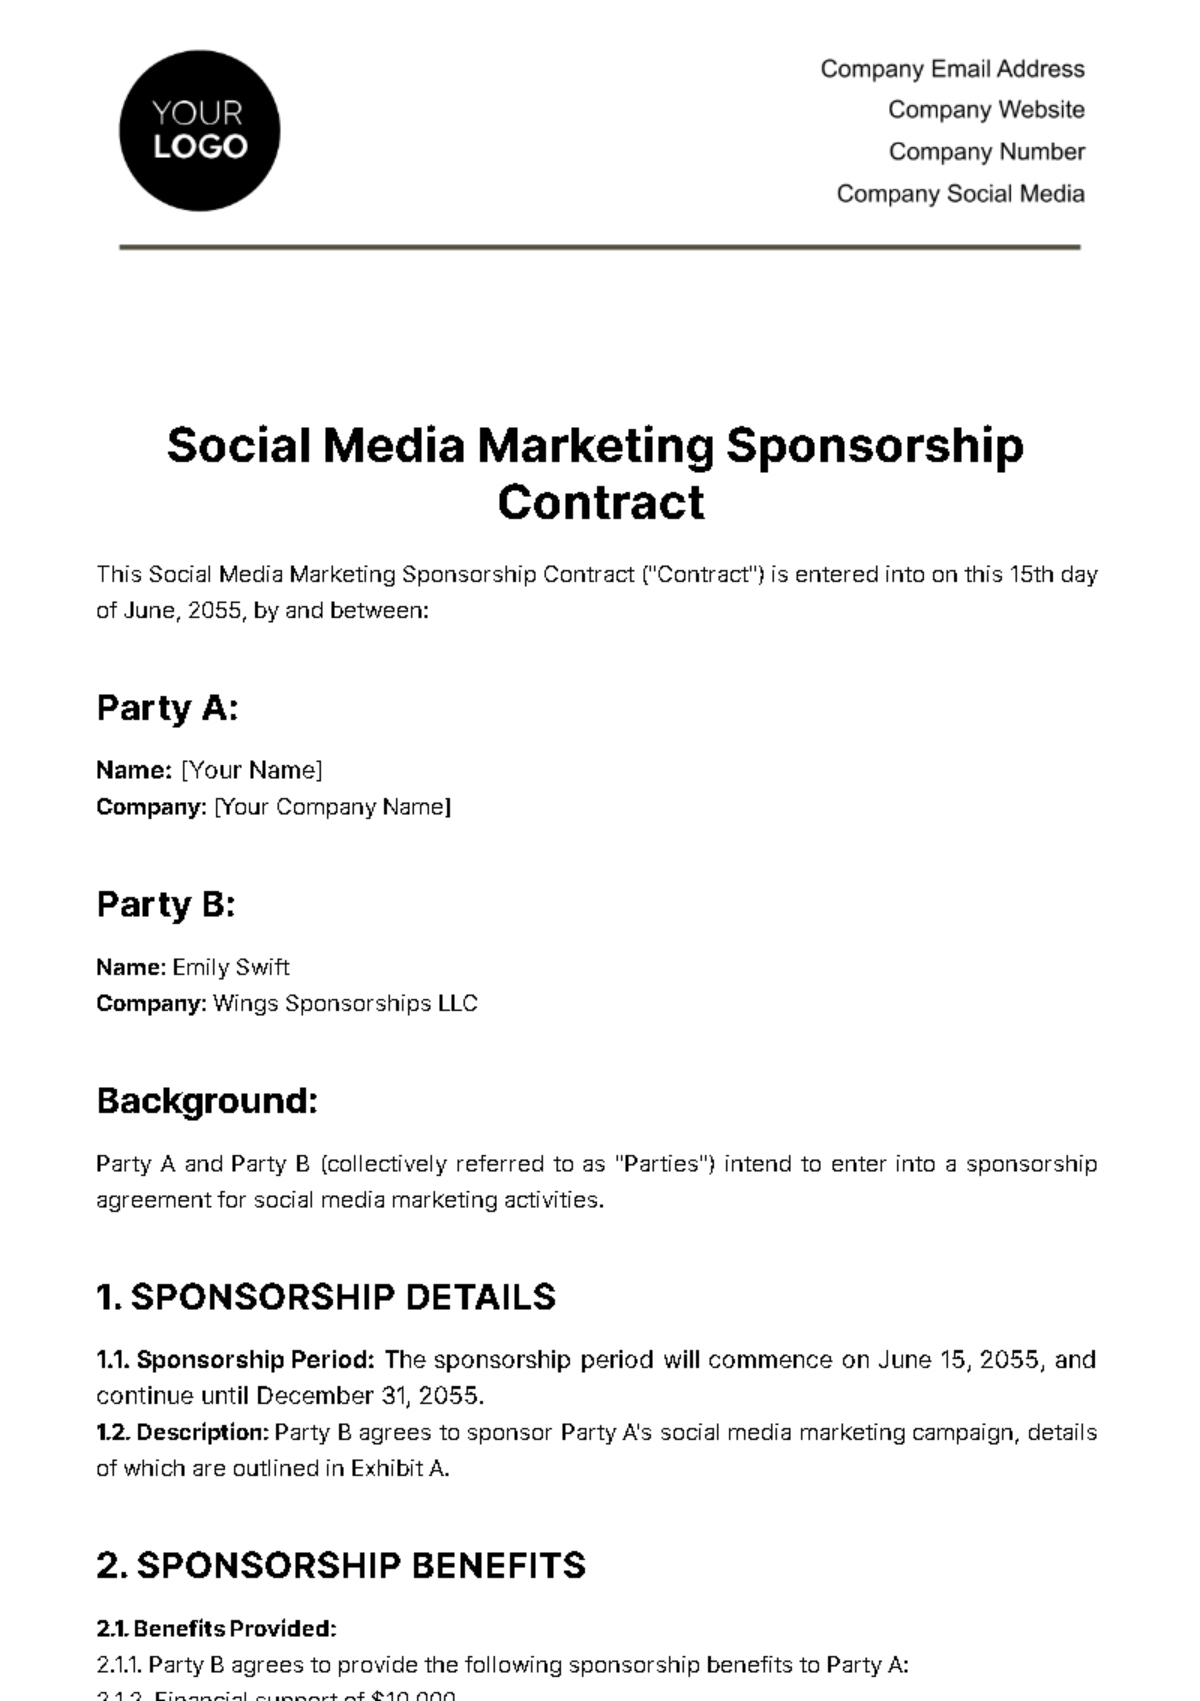 Social Media Marketing Sponsorship Contract Template